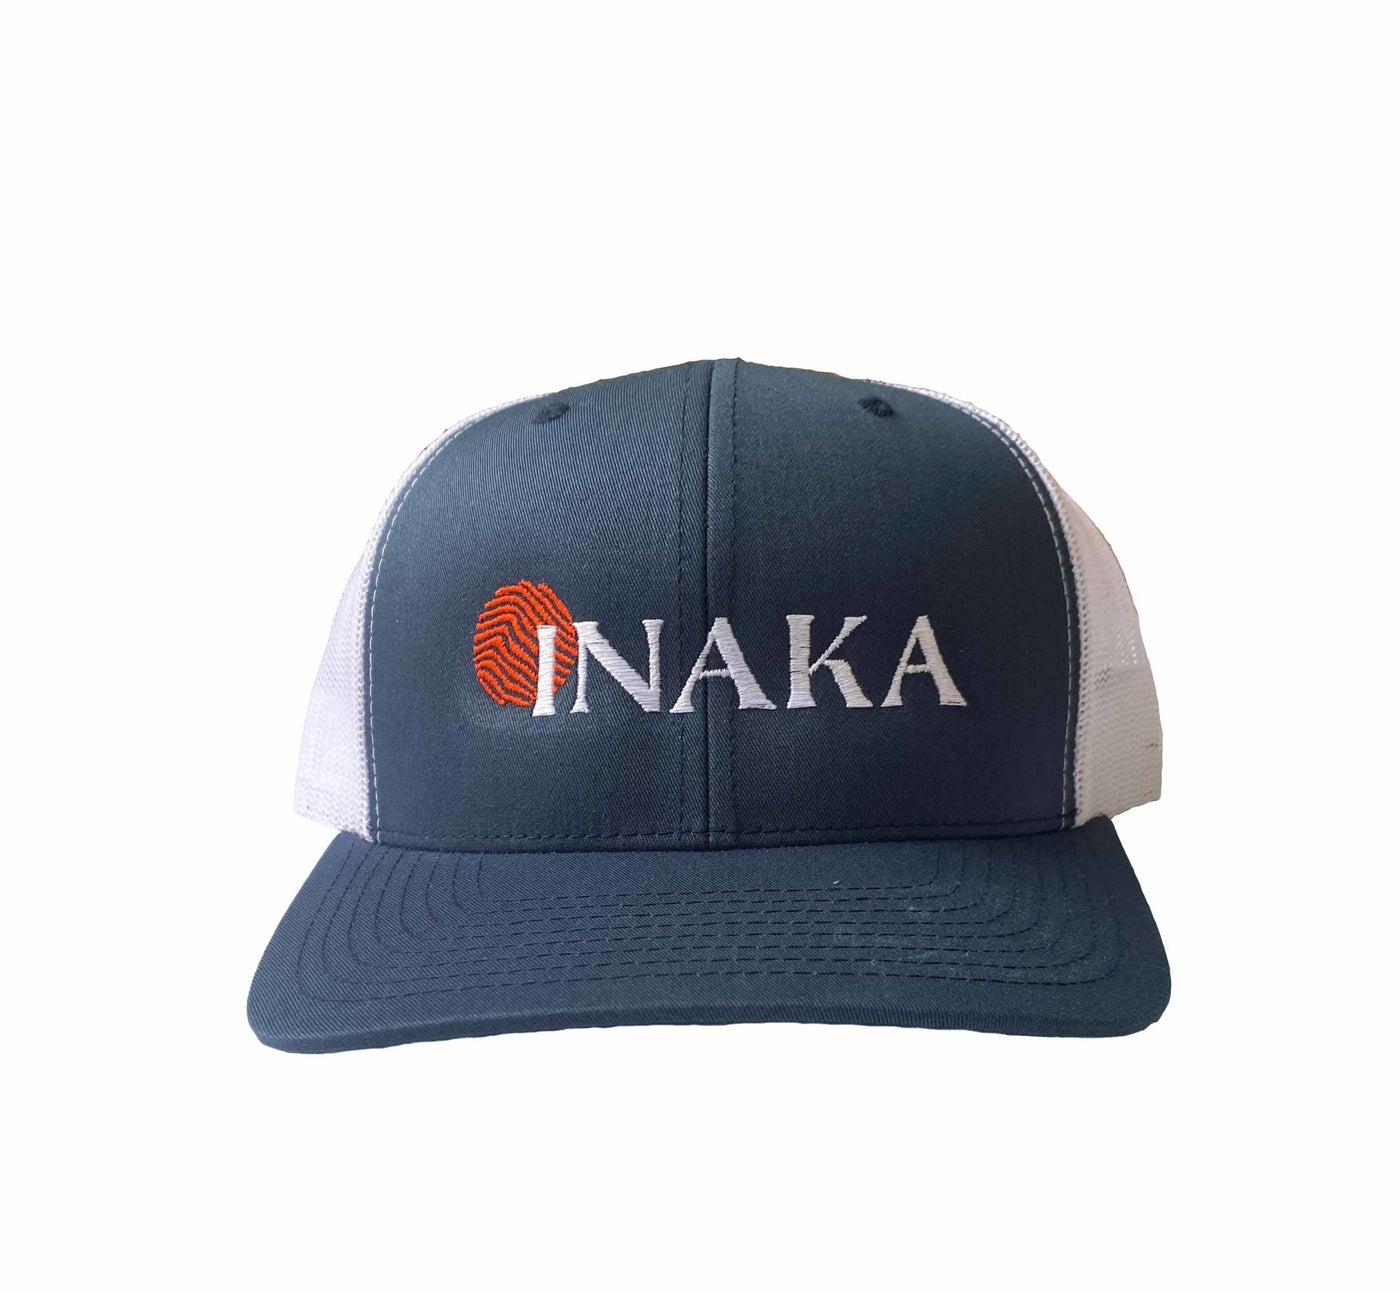 Inaka Snapback Hat